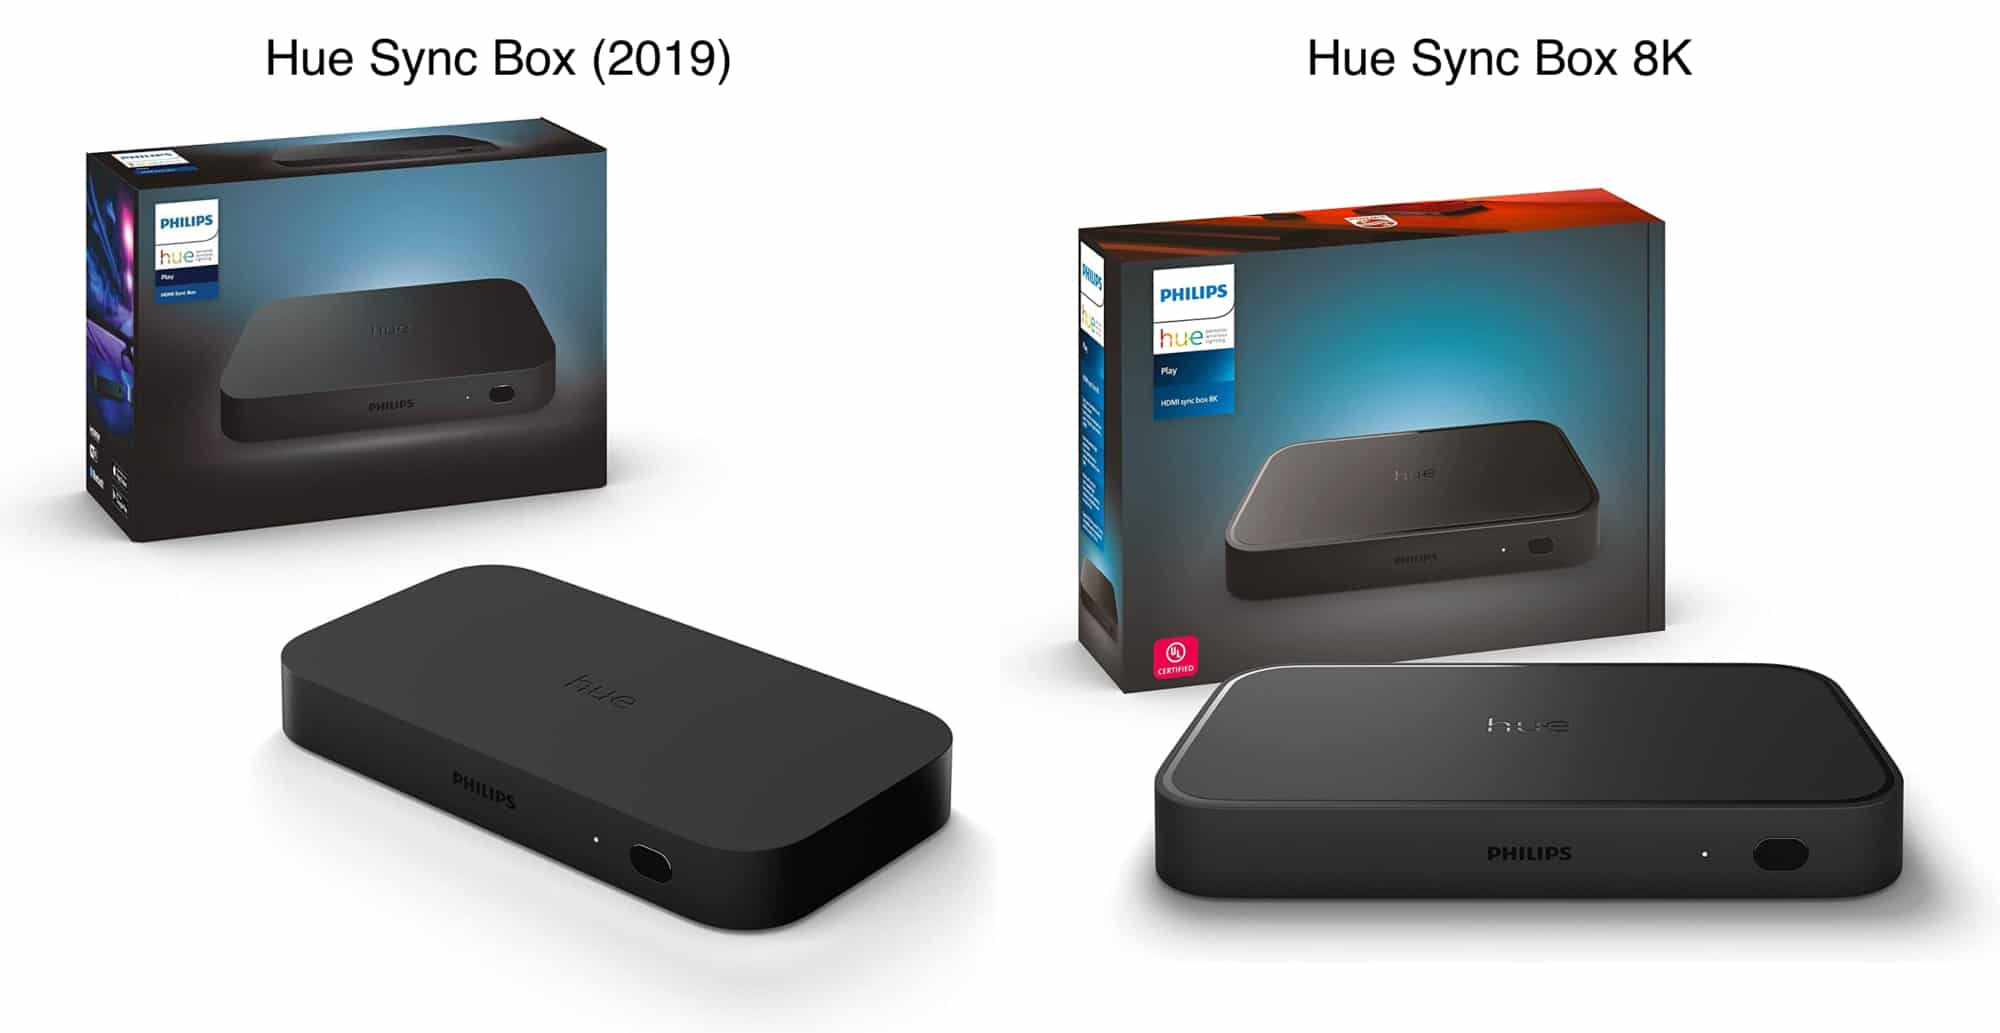 What about the Philips Hue Play HDMI Sync Box 8K? - Hueblog.com